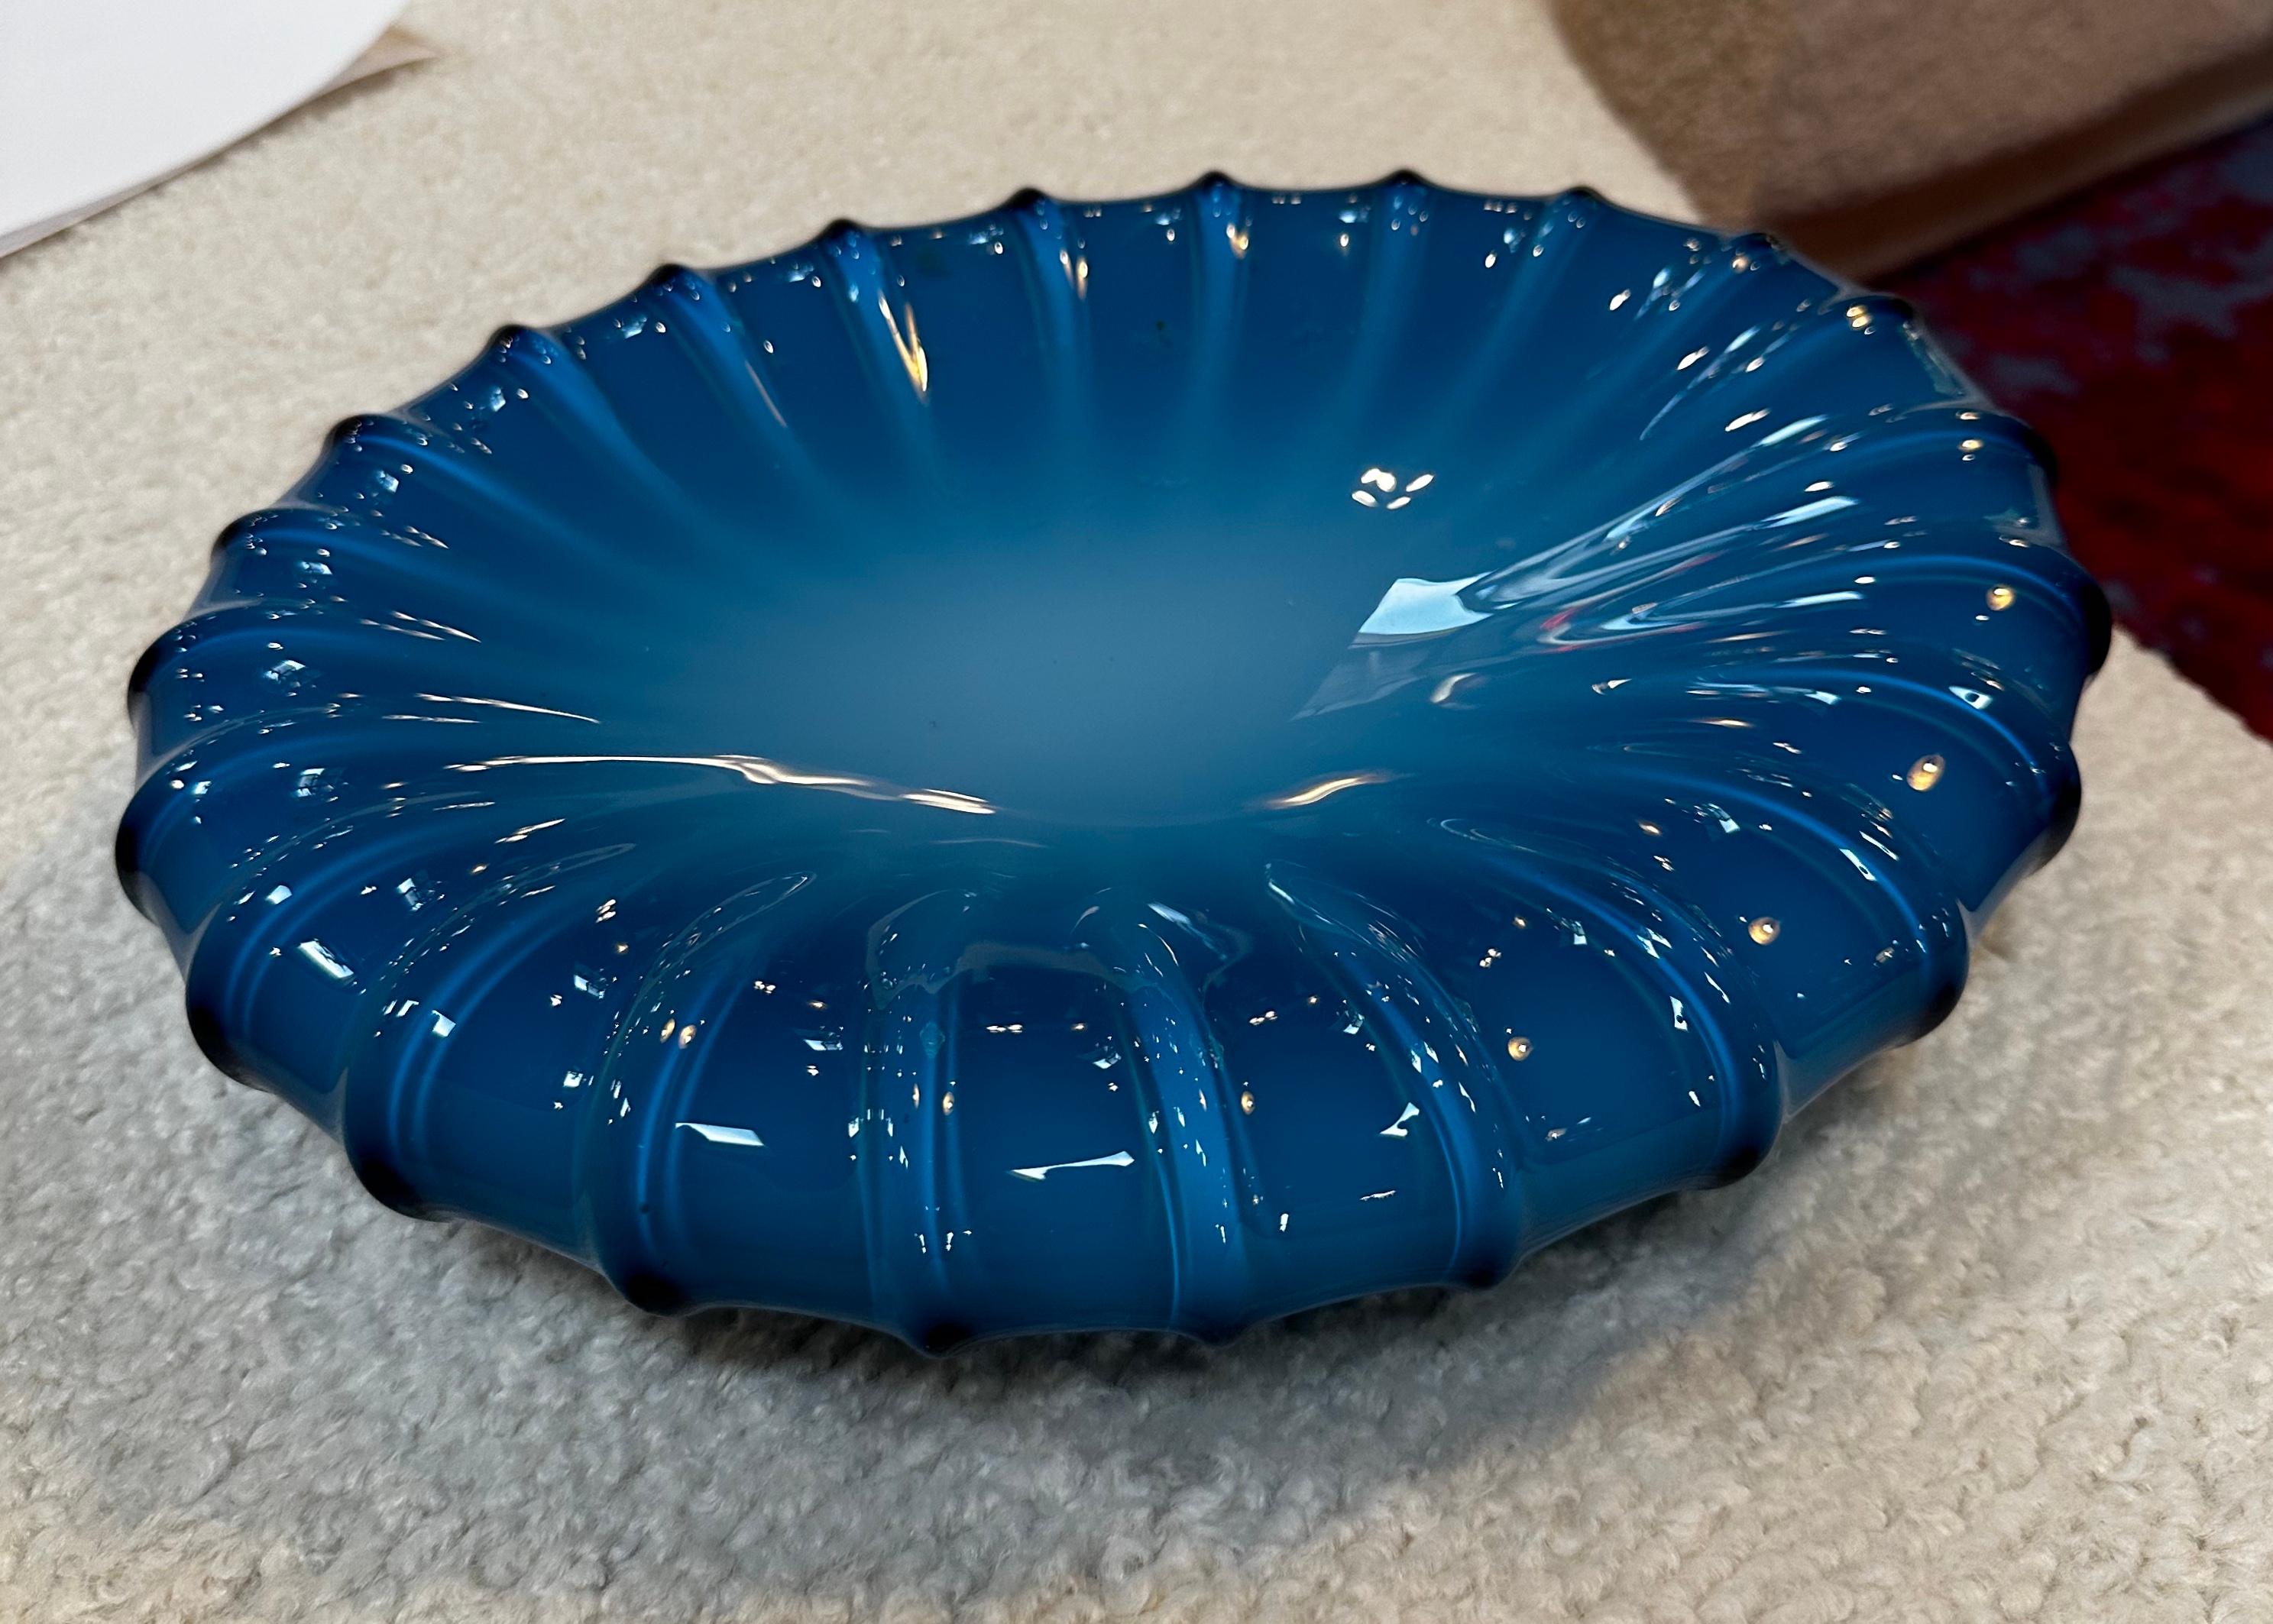 Vintage Blue Glass Bowl By Tommaso Barbi 1980s
